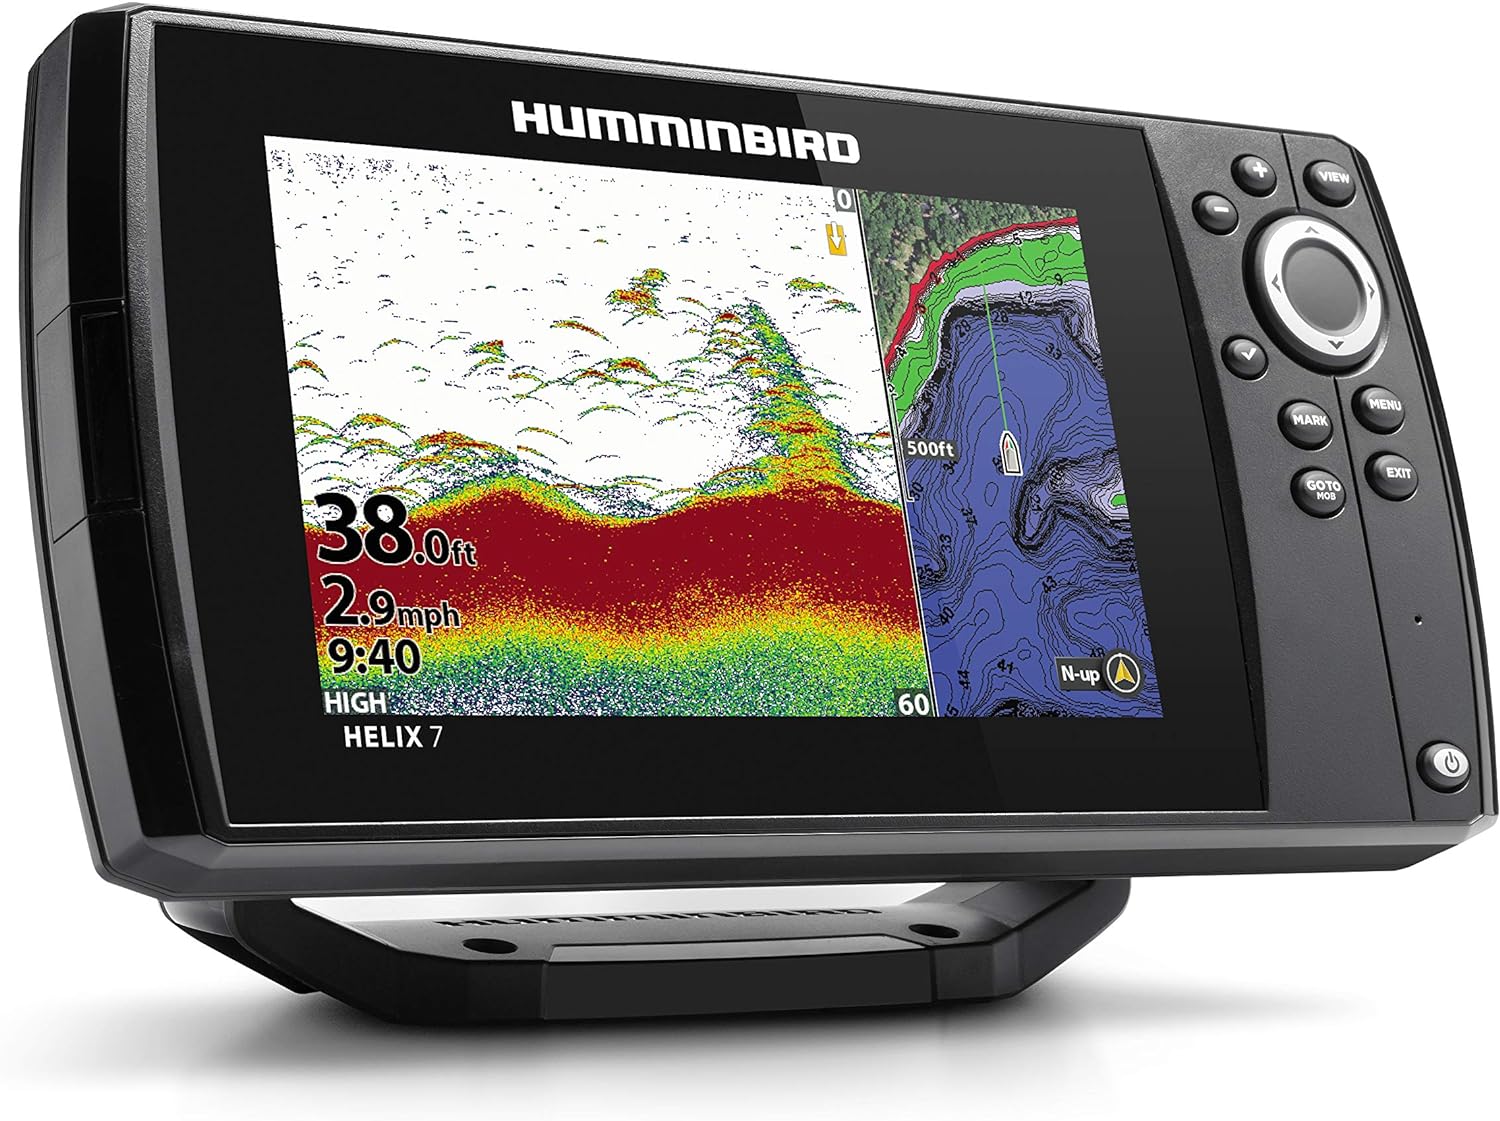 Humminbird 410950-1 HELIX 7 CHIRP MSI (MEGA Side Imaging) GPS G3 Fish Finder - Humminbird 410950-1 Fish Finder Review